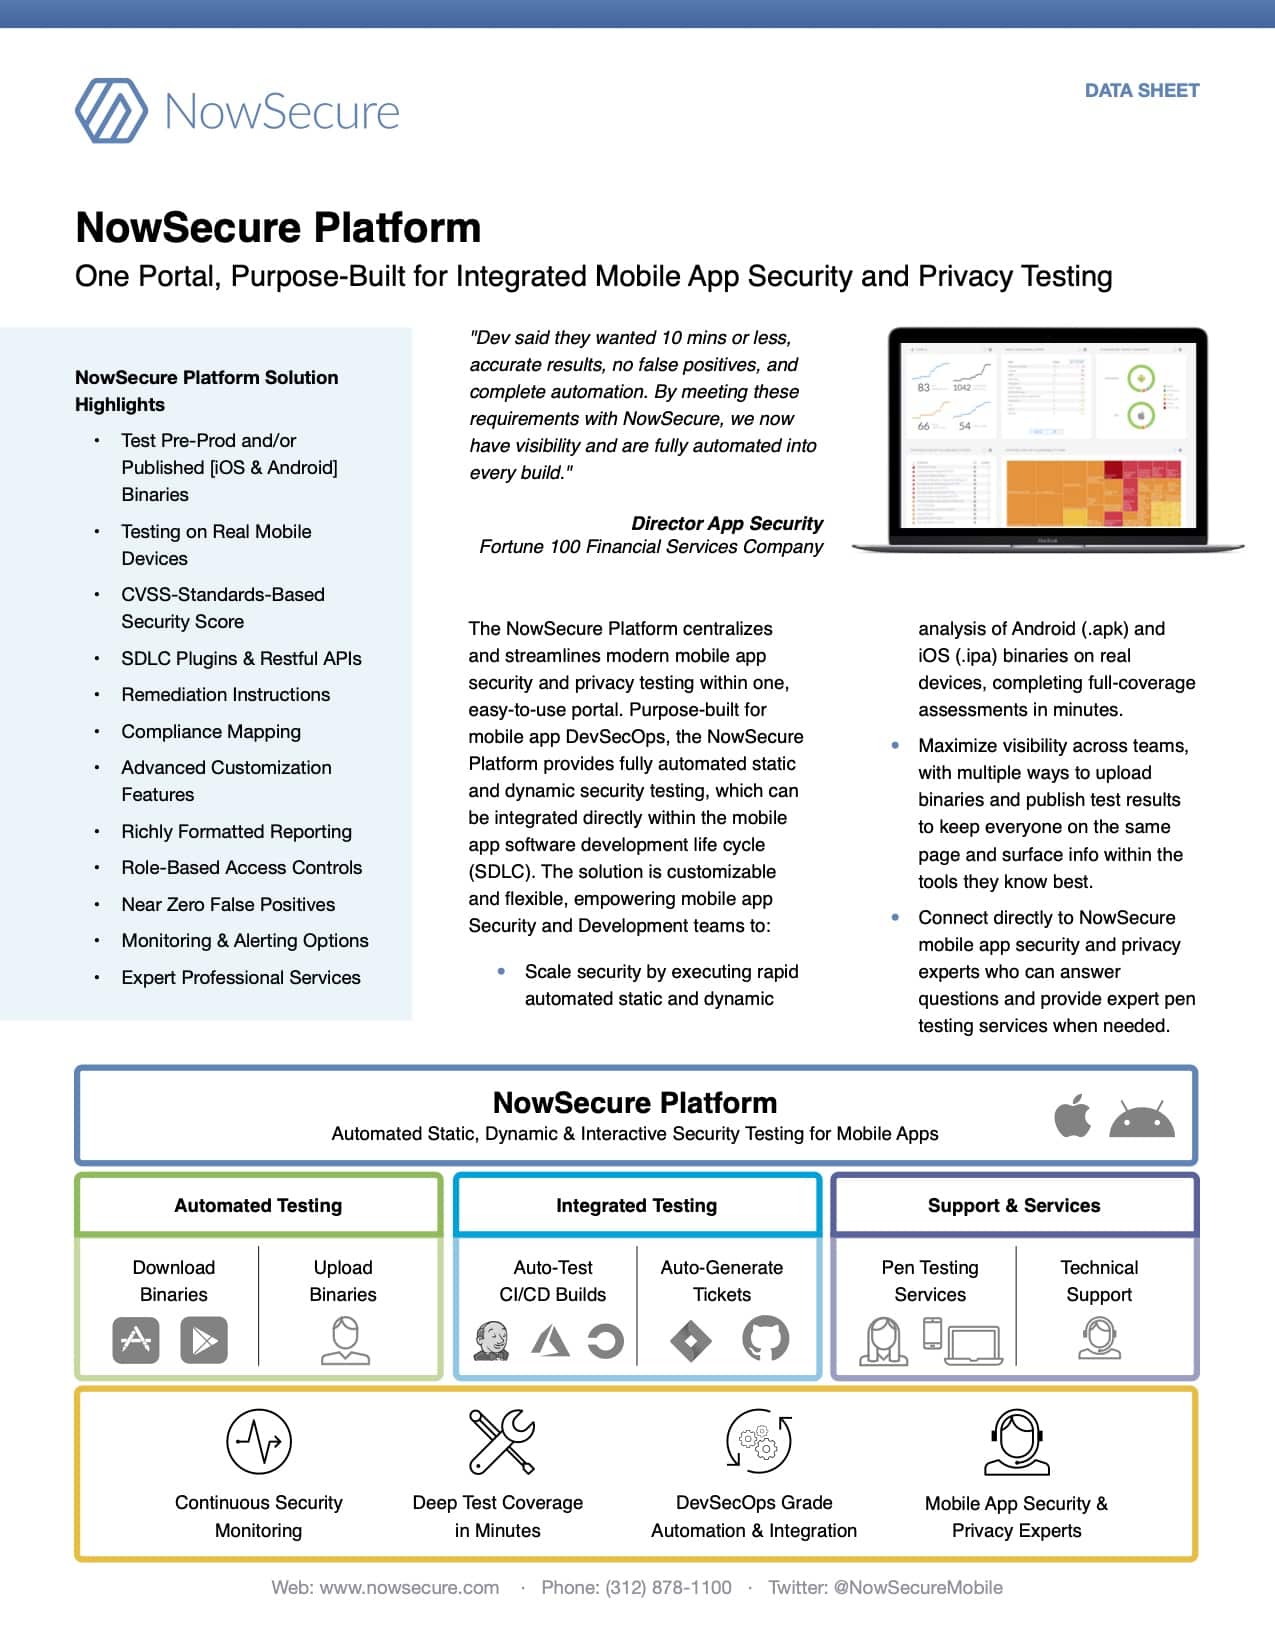 NowSecure Platform